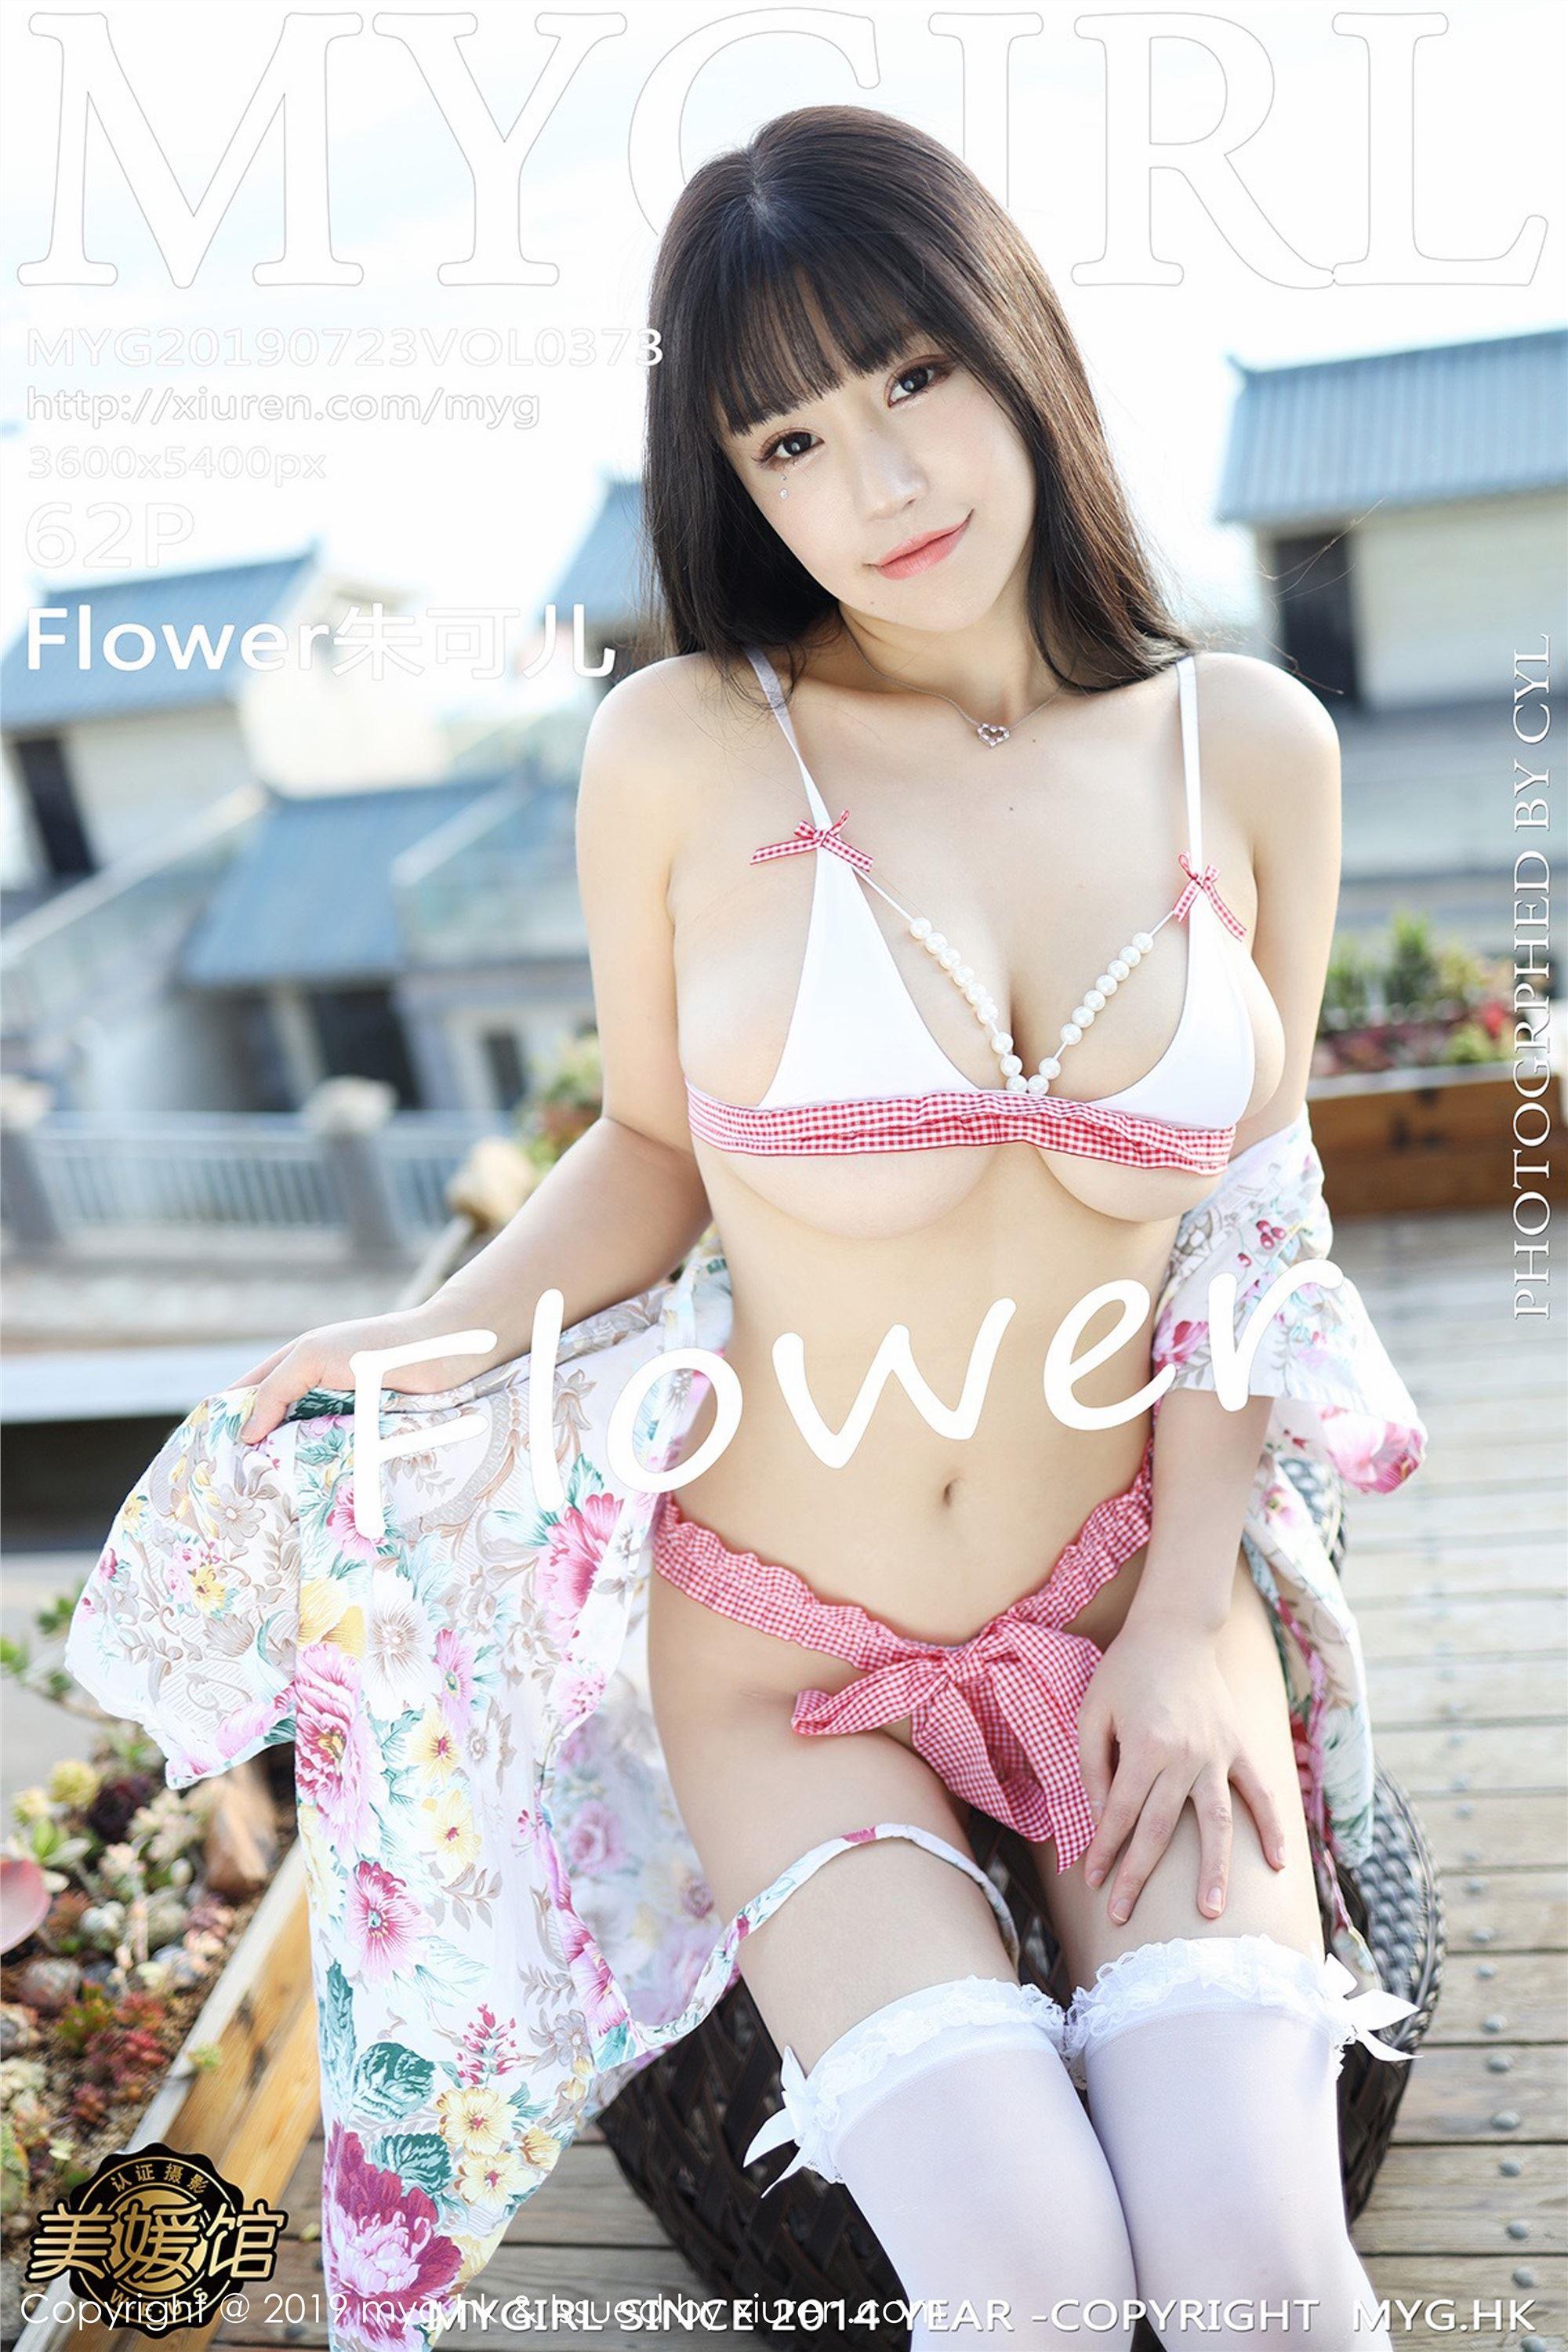 MyGirl 美媛馆新特刊 2019-08-29 Vol.385 Flower朱可儿 - 3.jpg